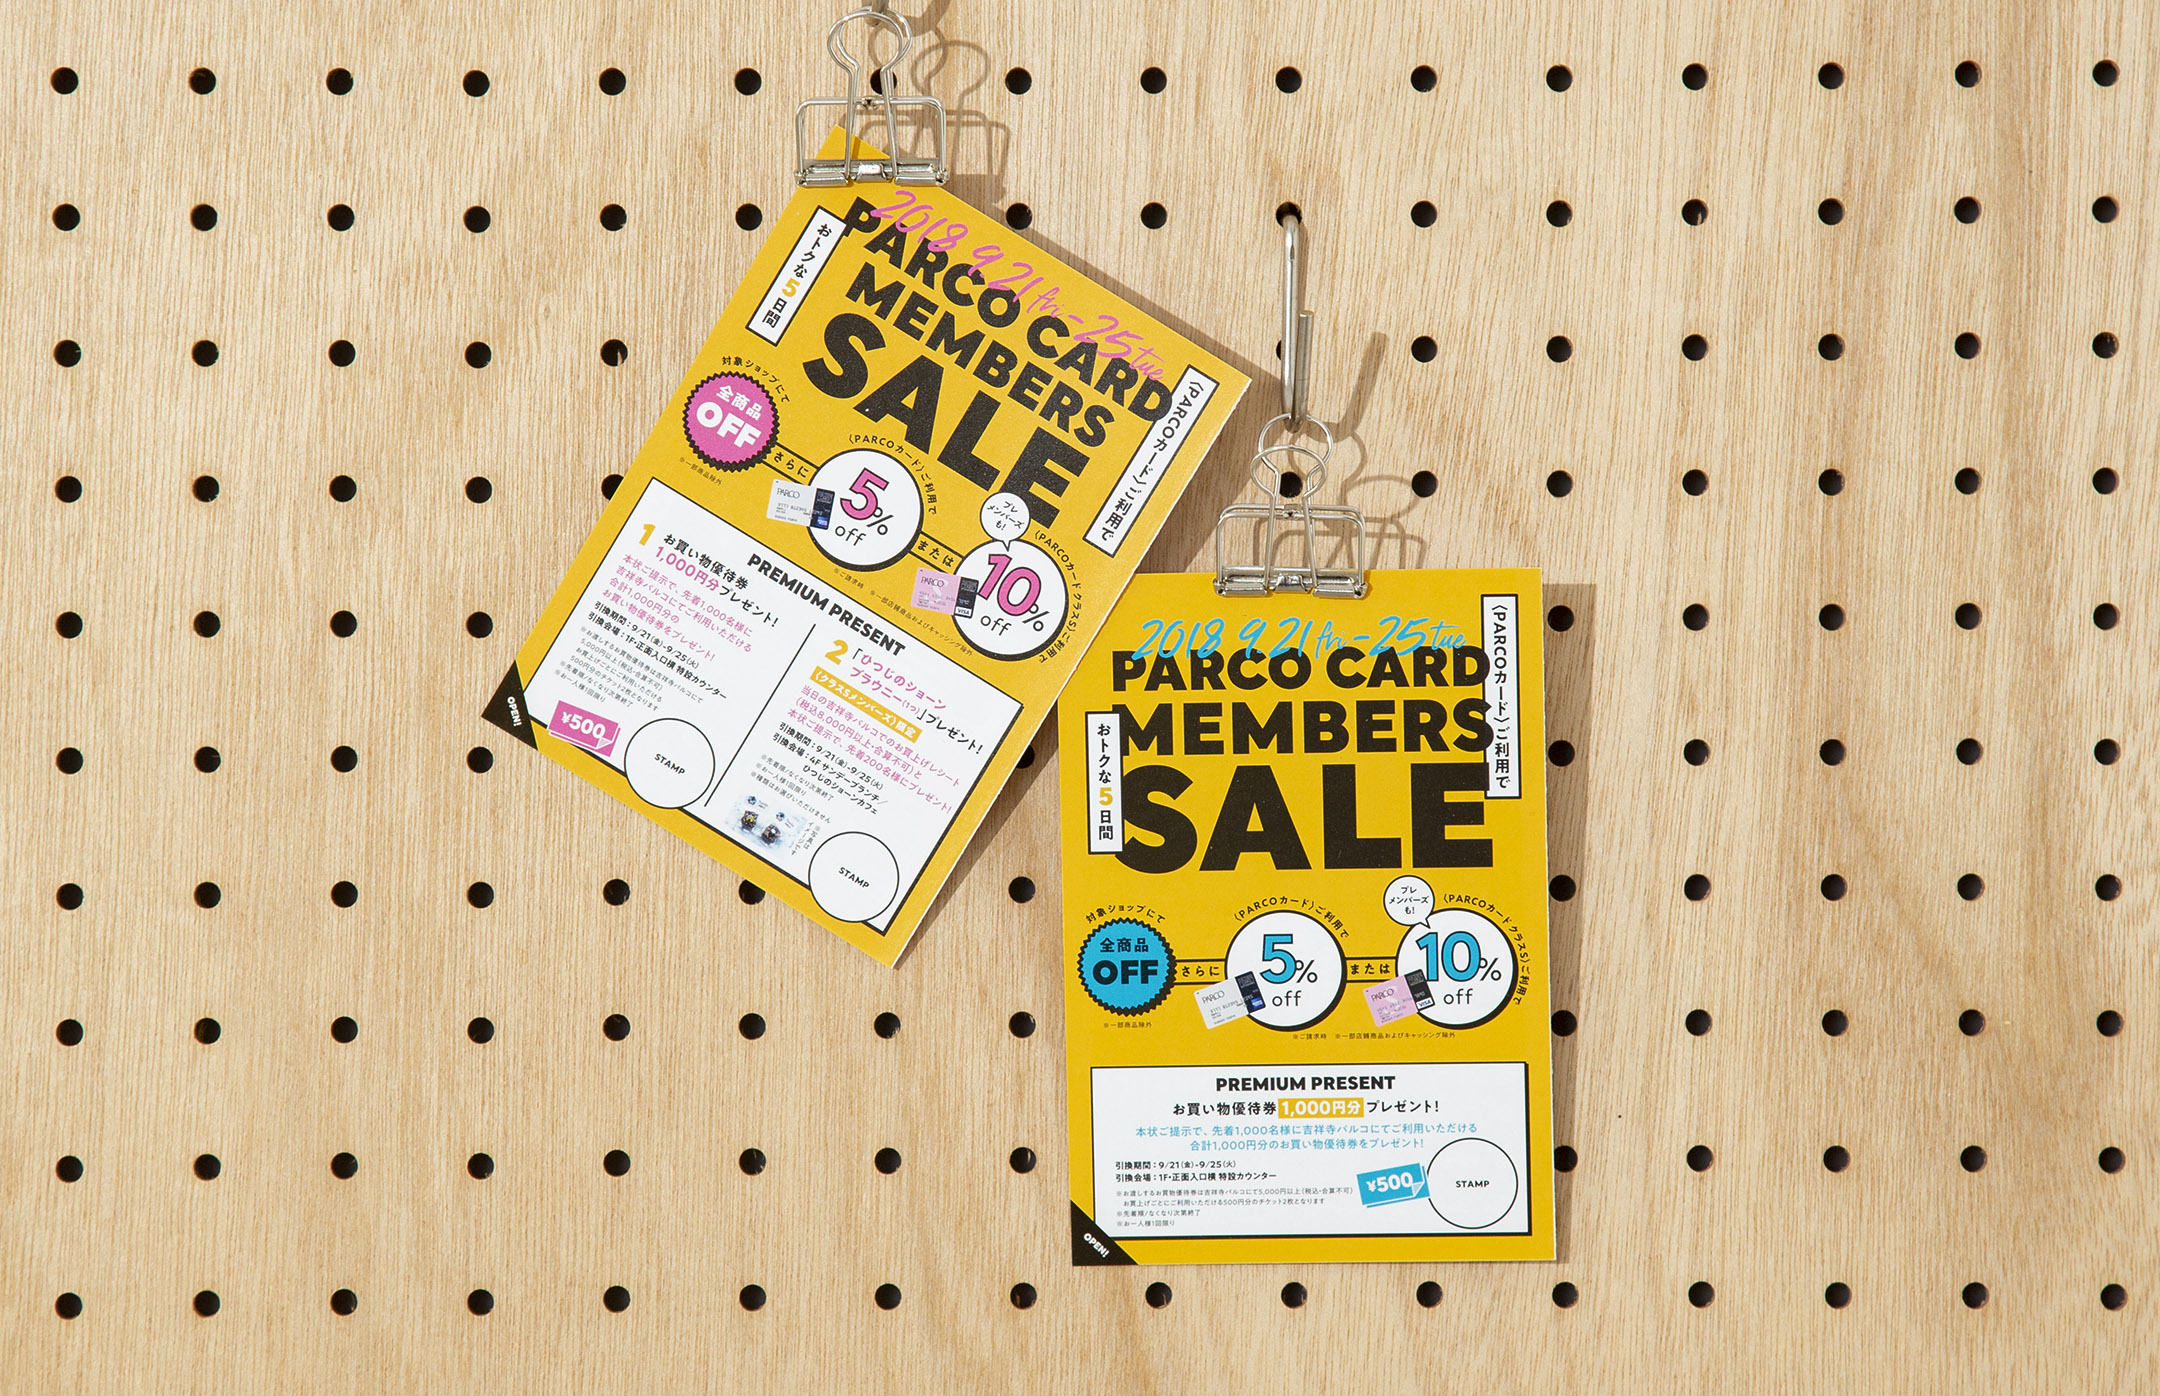 KICHIJOJI PARCO “PARCO CARD MEMBERS SALE” image visual & DM design